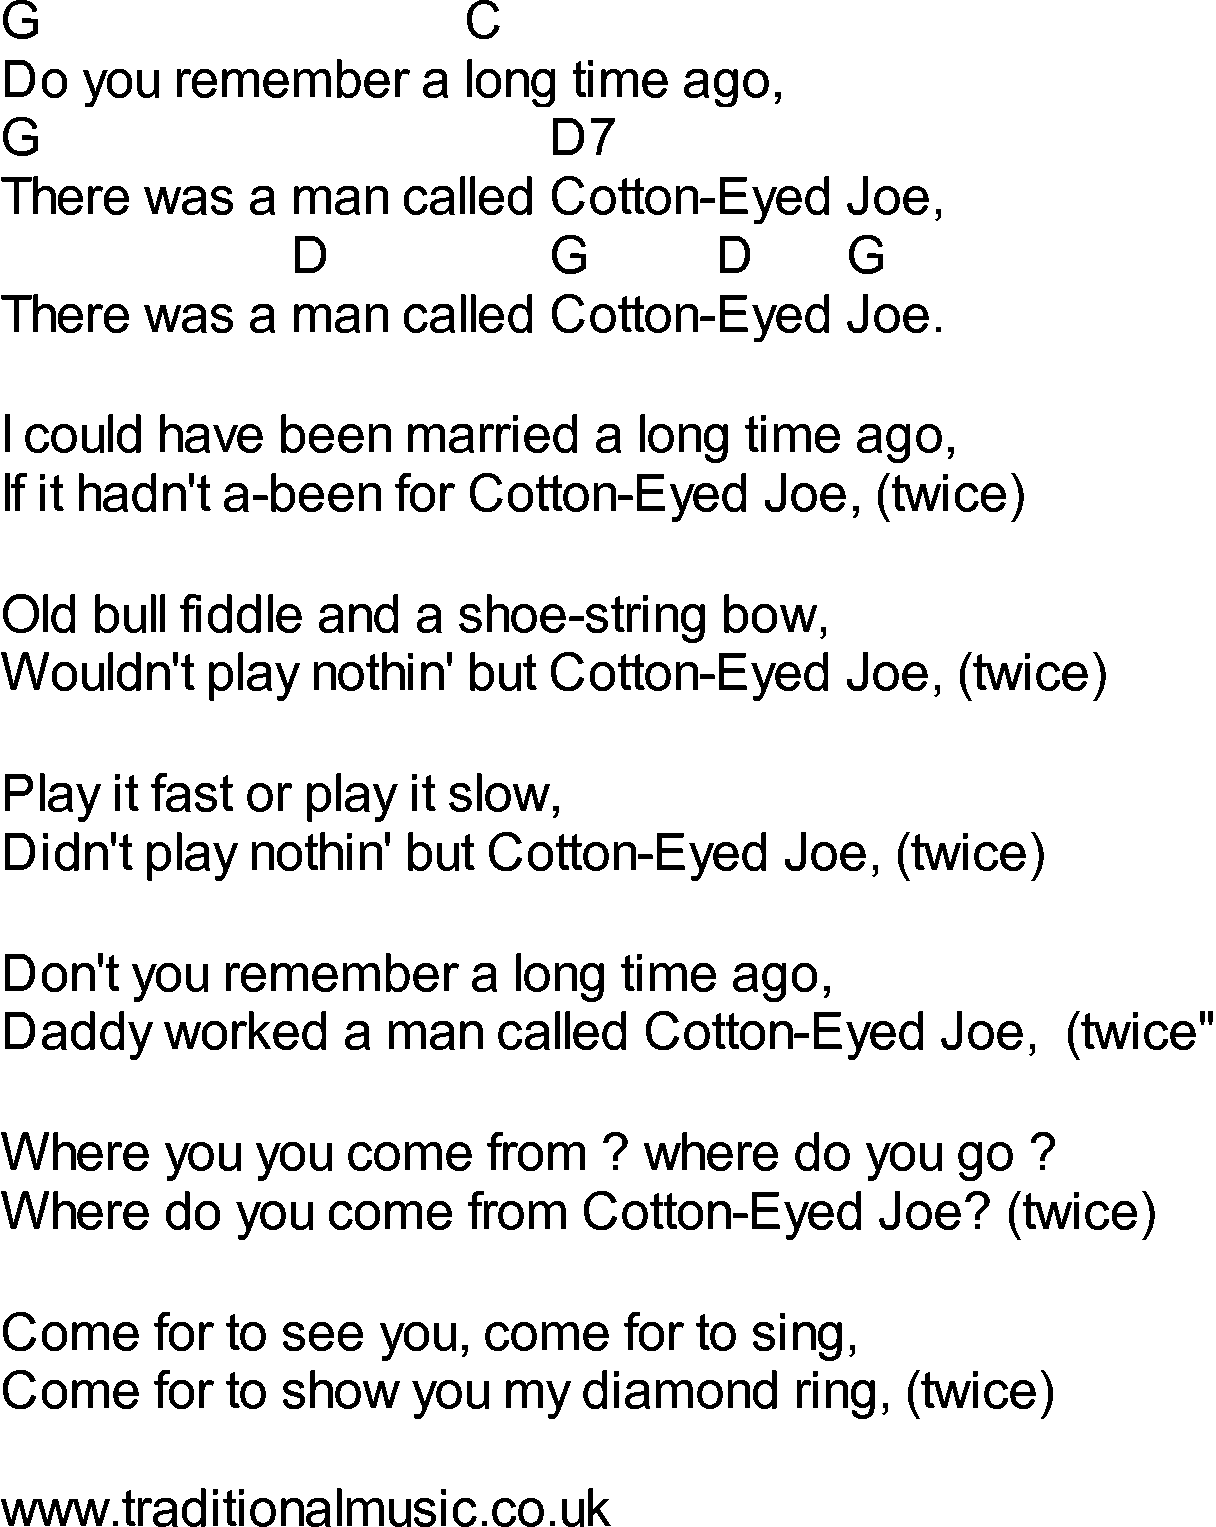 Cotton eye joe перевод на русский. Cotton-eyed Joe. Cotton Eye Joe текст. Песня Eye Joe. Ковбойская песня Cotton Eye Joe.